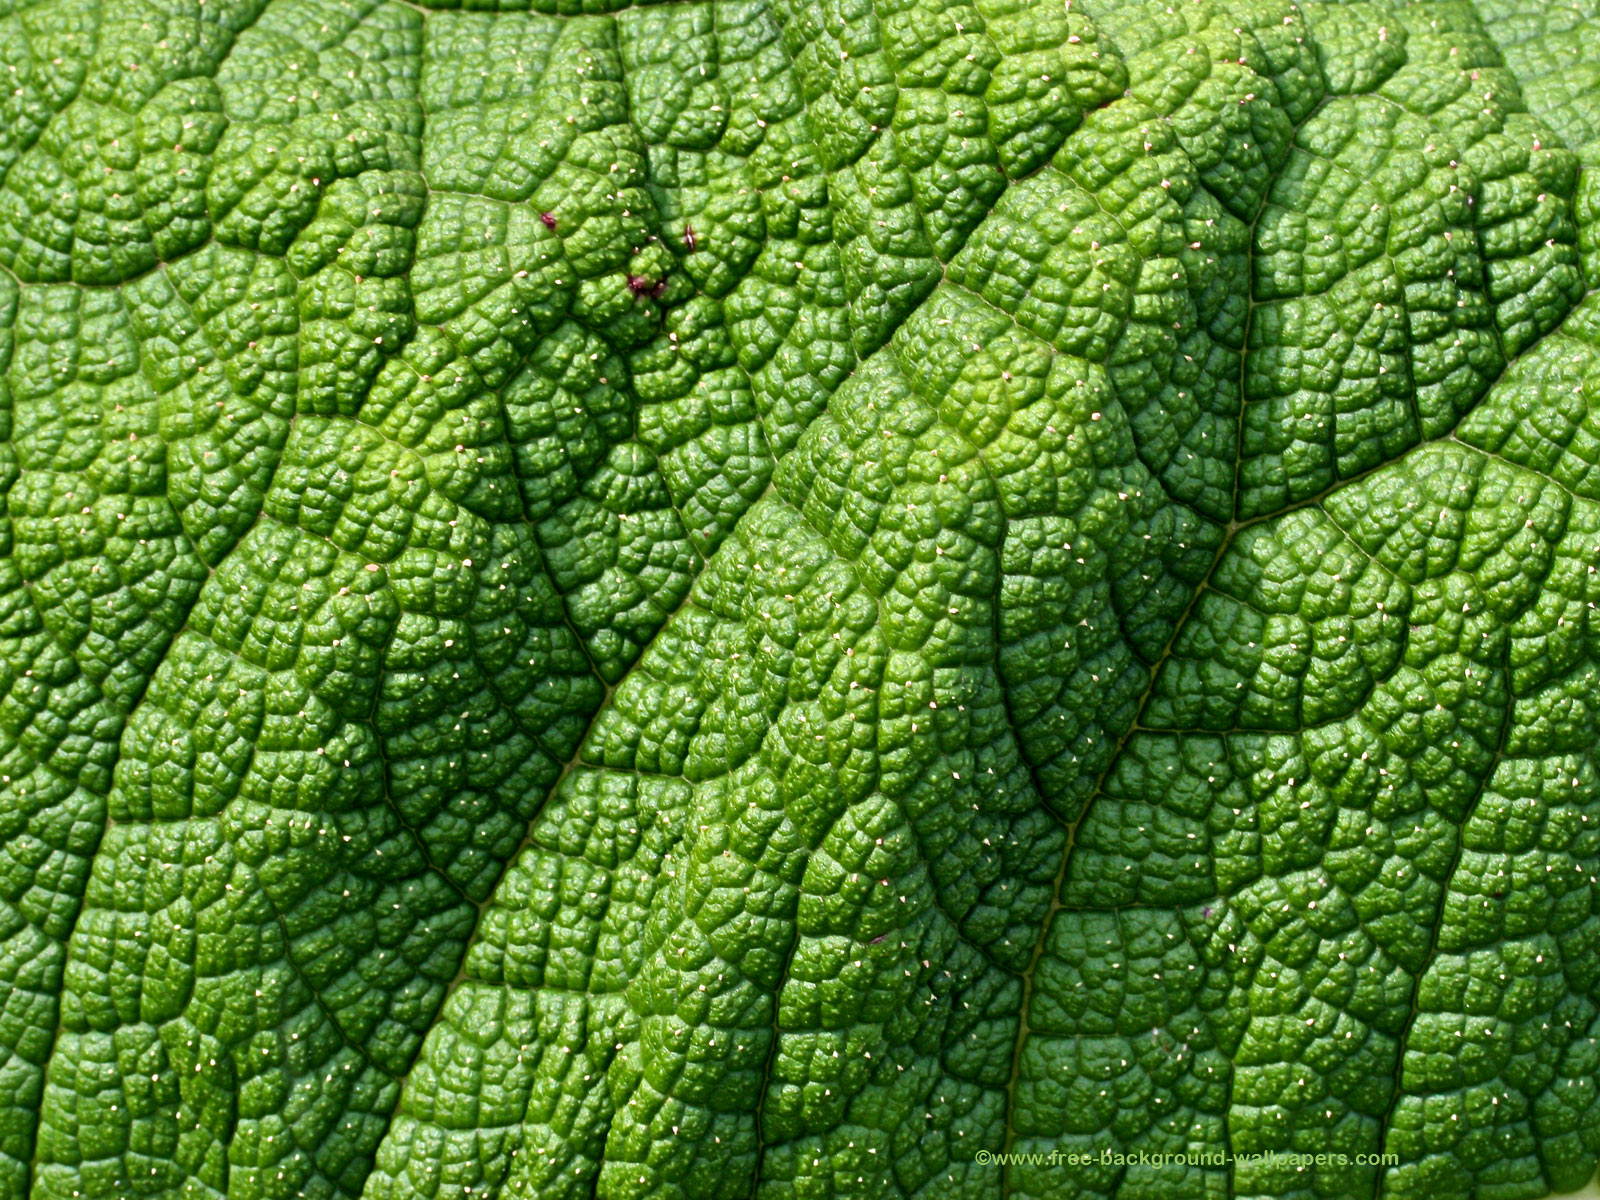 Giant Leaf Texture Flower Desktop Wallpaper - 1600x1200 pixels